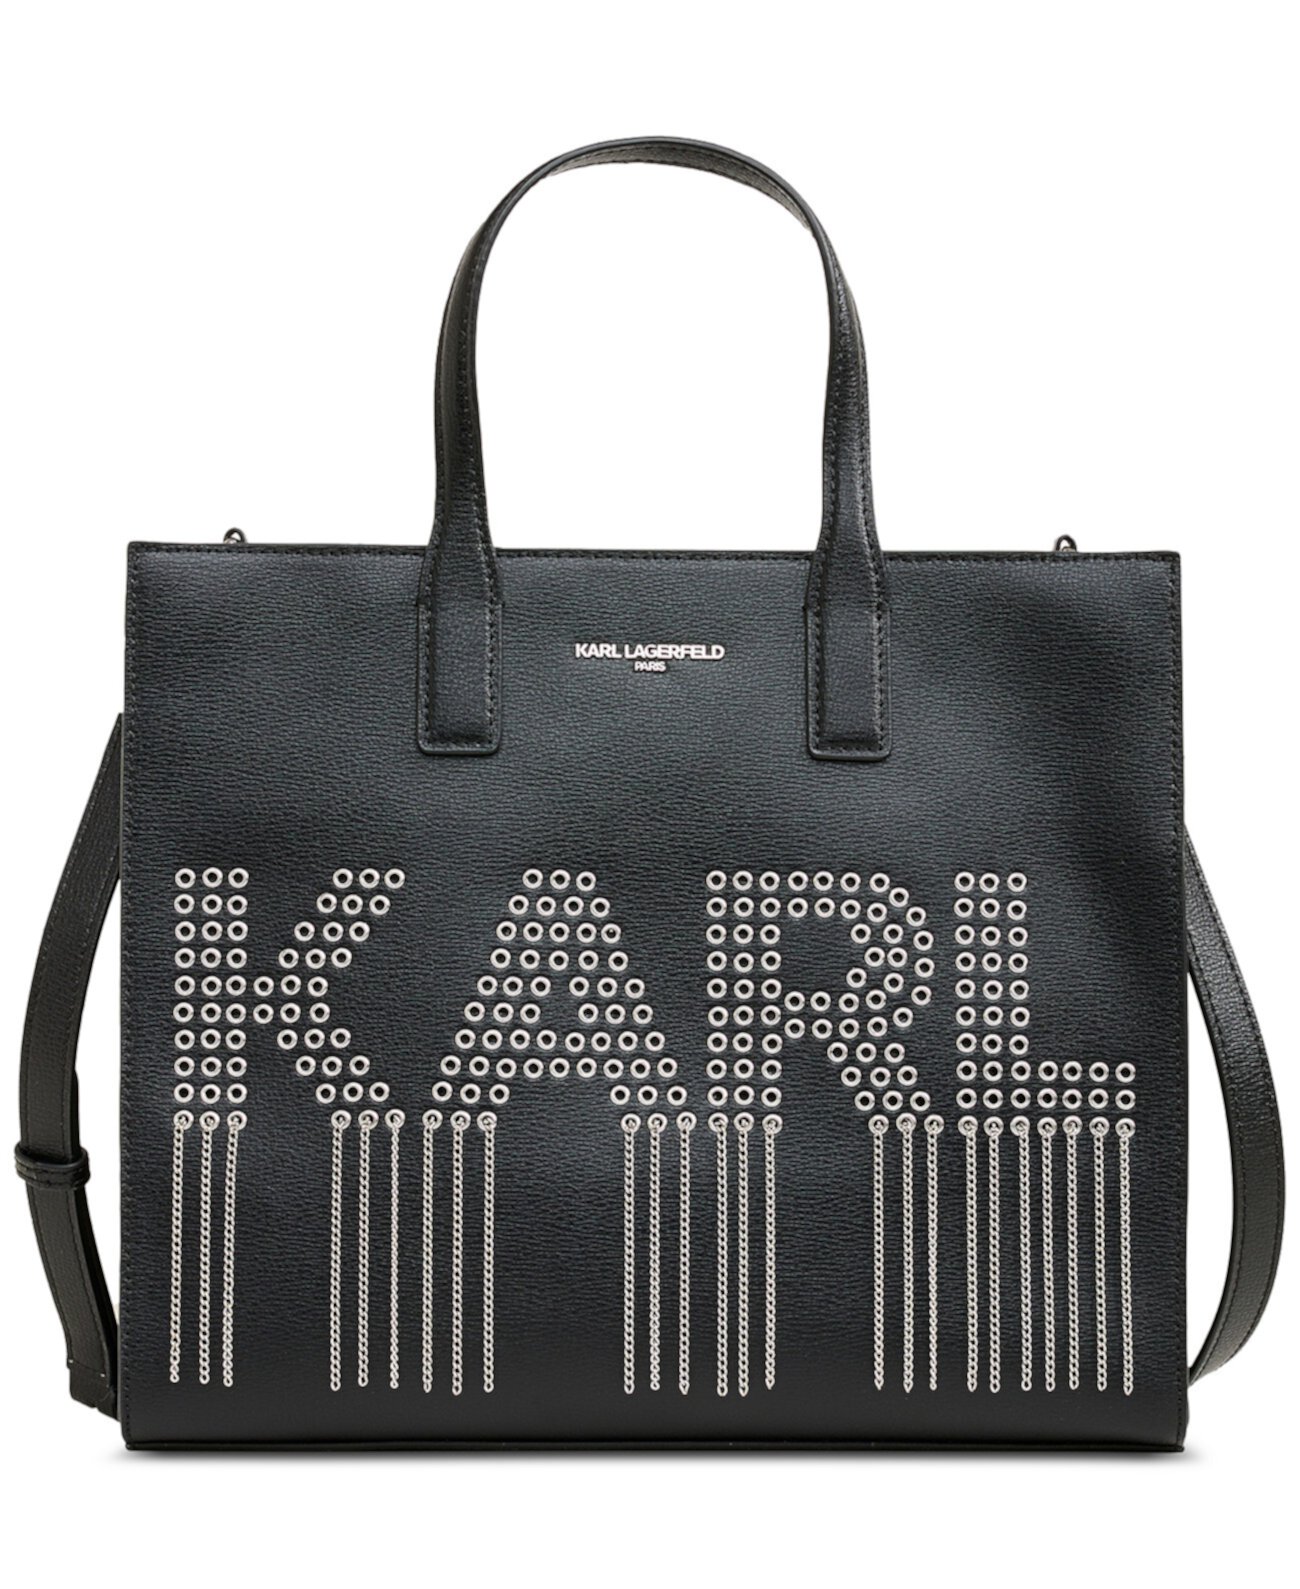 Кожаная сумка-тоут среднего размера в стиле модерн Karl Lagerfeld Paris